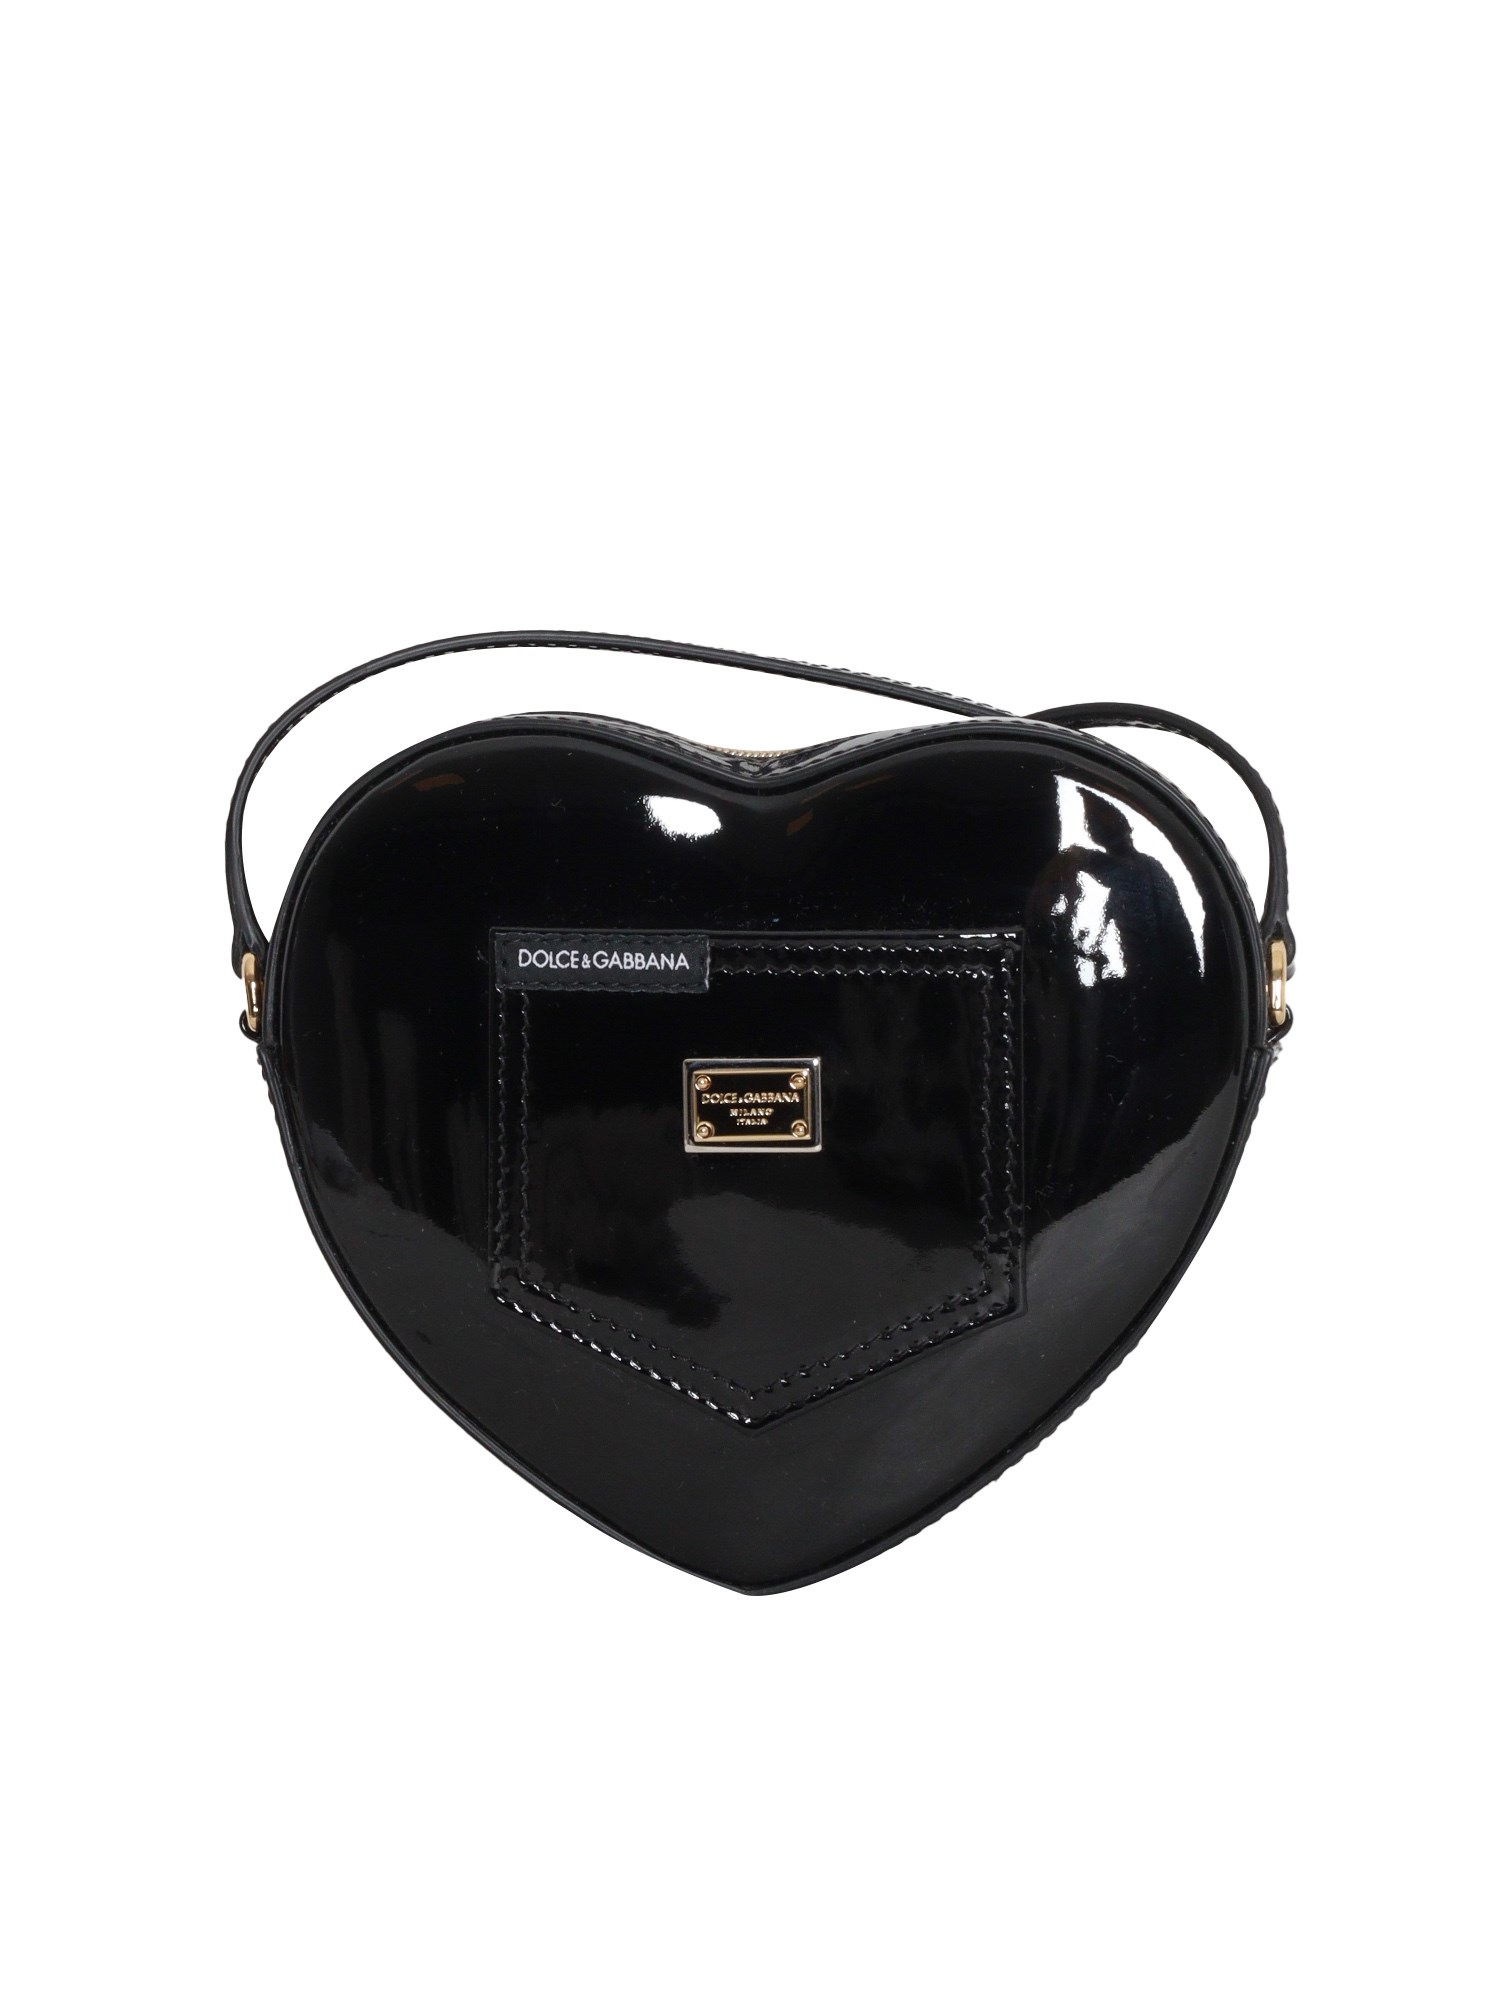 Dolce & Gabbana Junior Heart Shaped Bag In Black